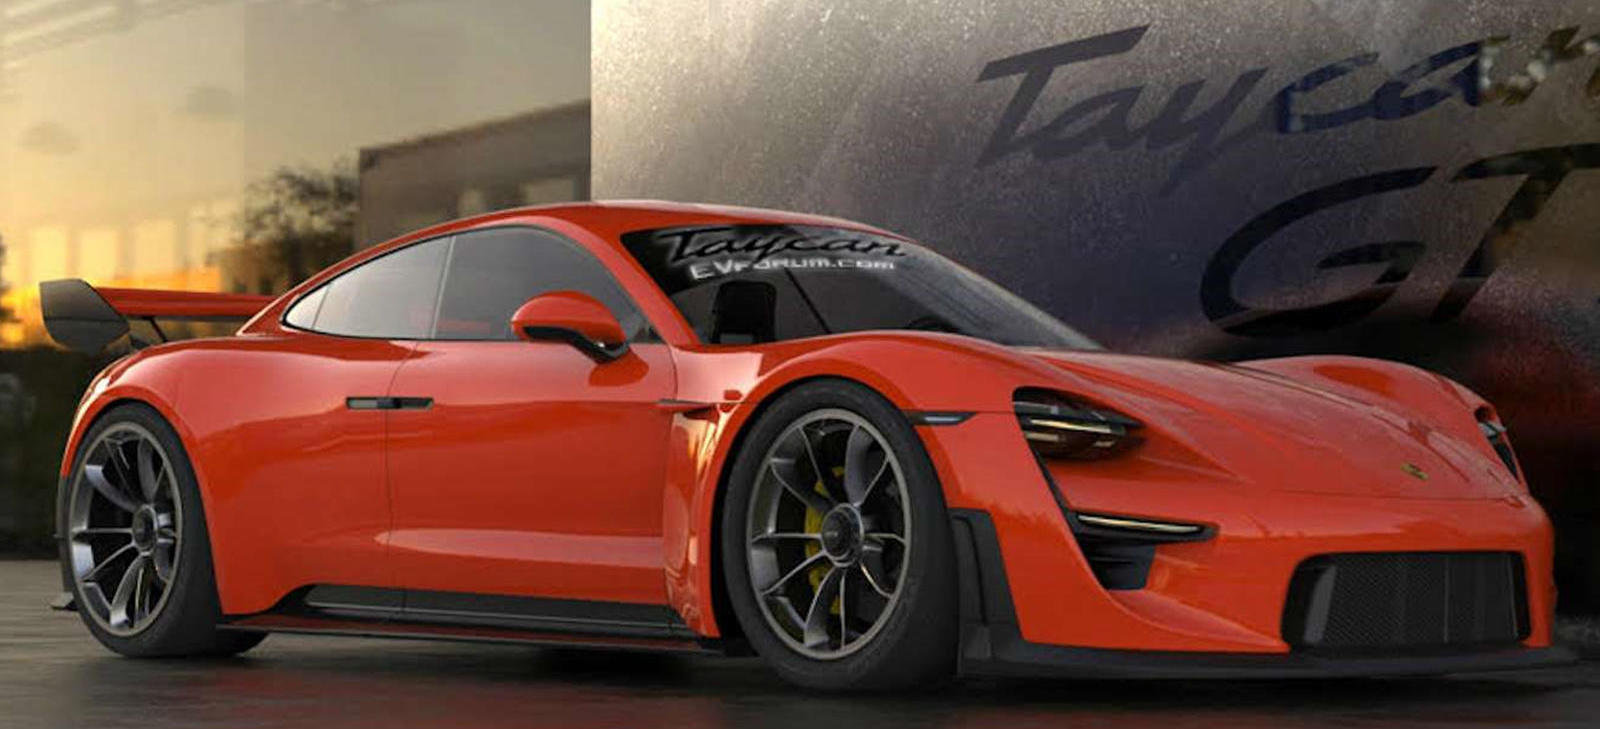 Porsche Taycan Taycan GT3 RS / higher powered, sportier Taycan? 539348